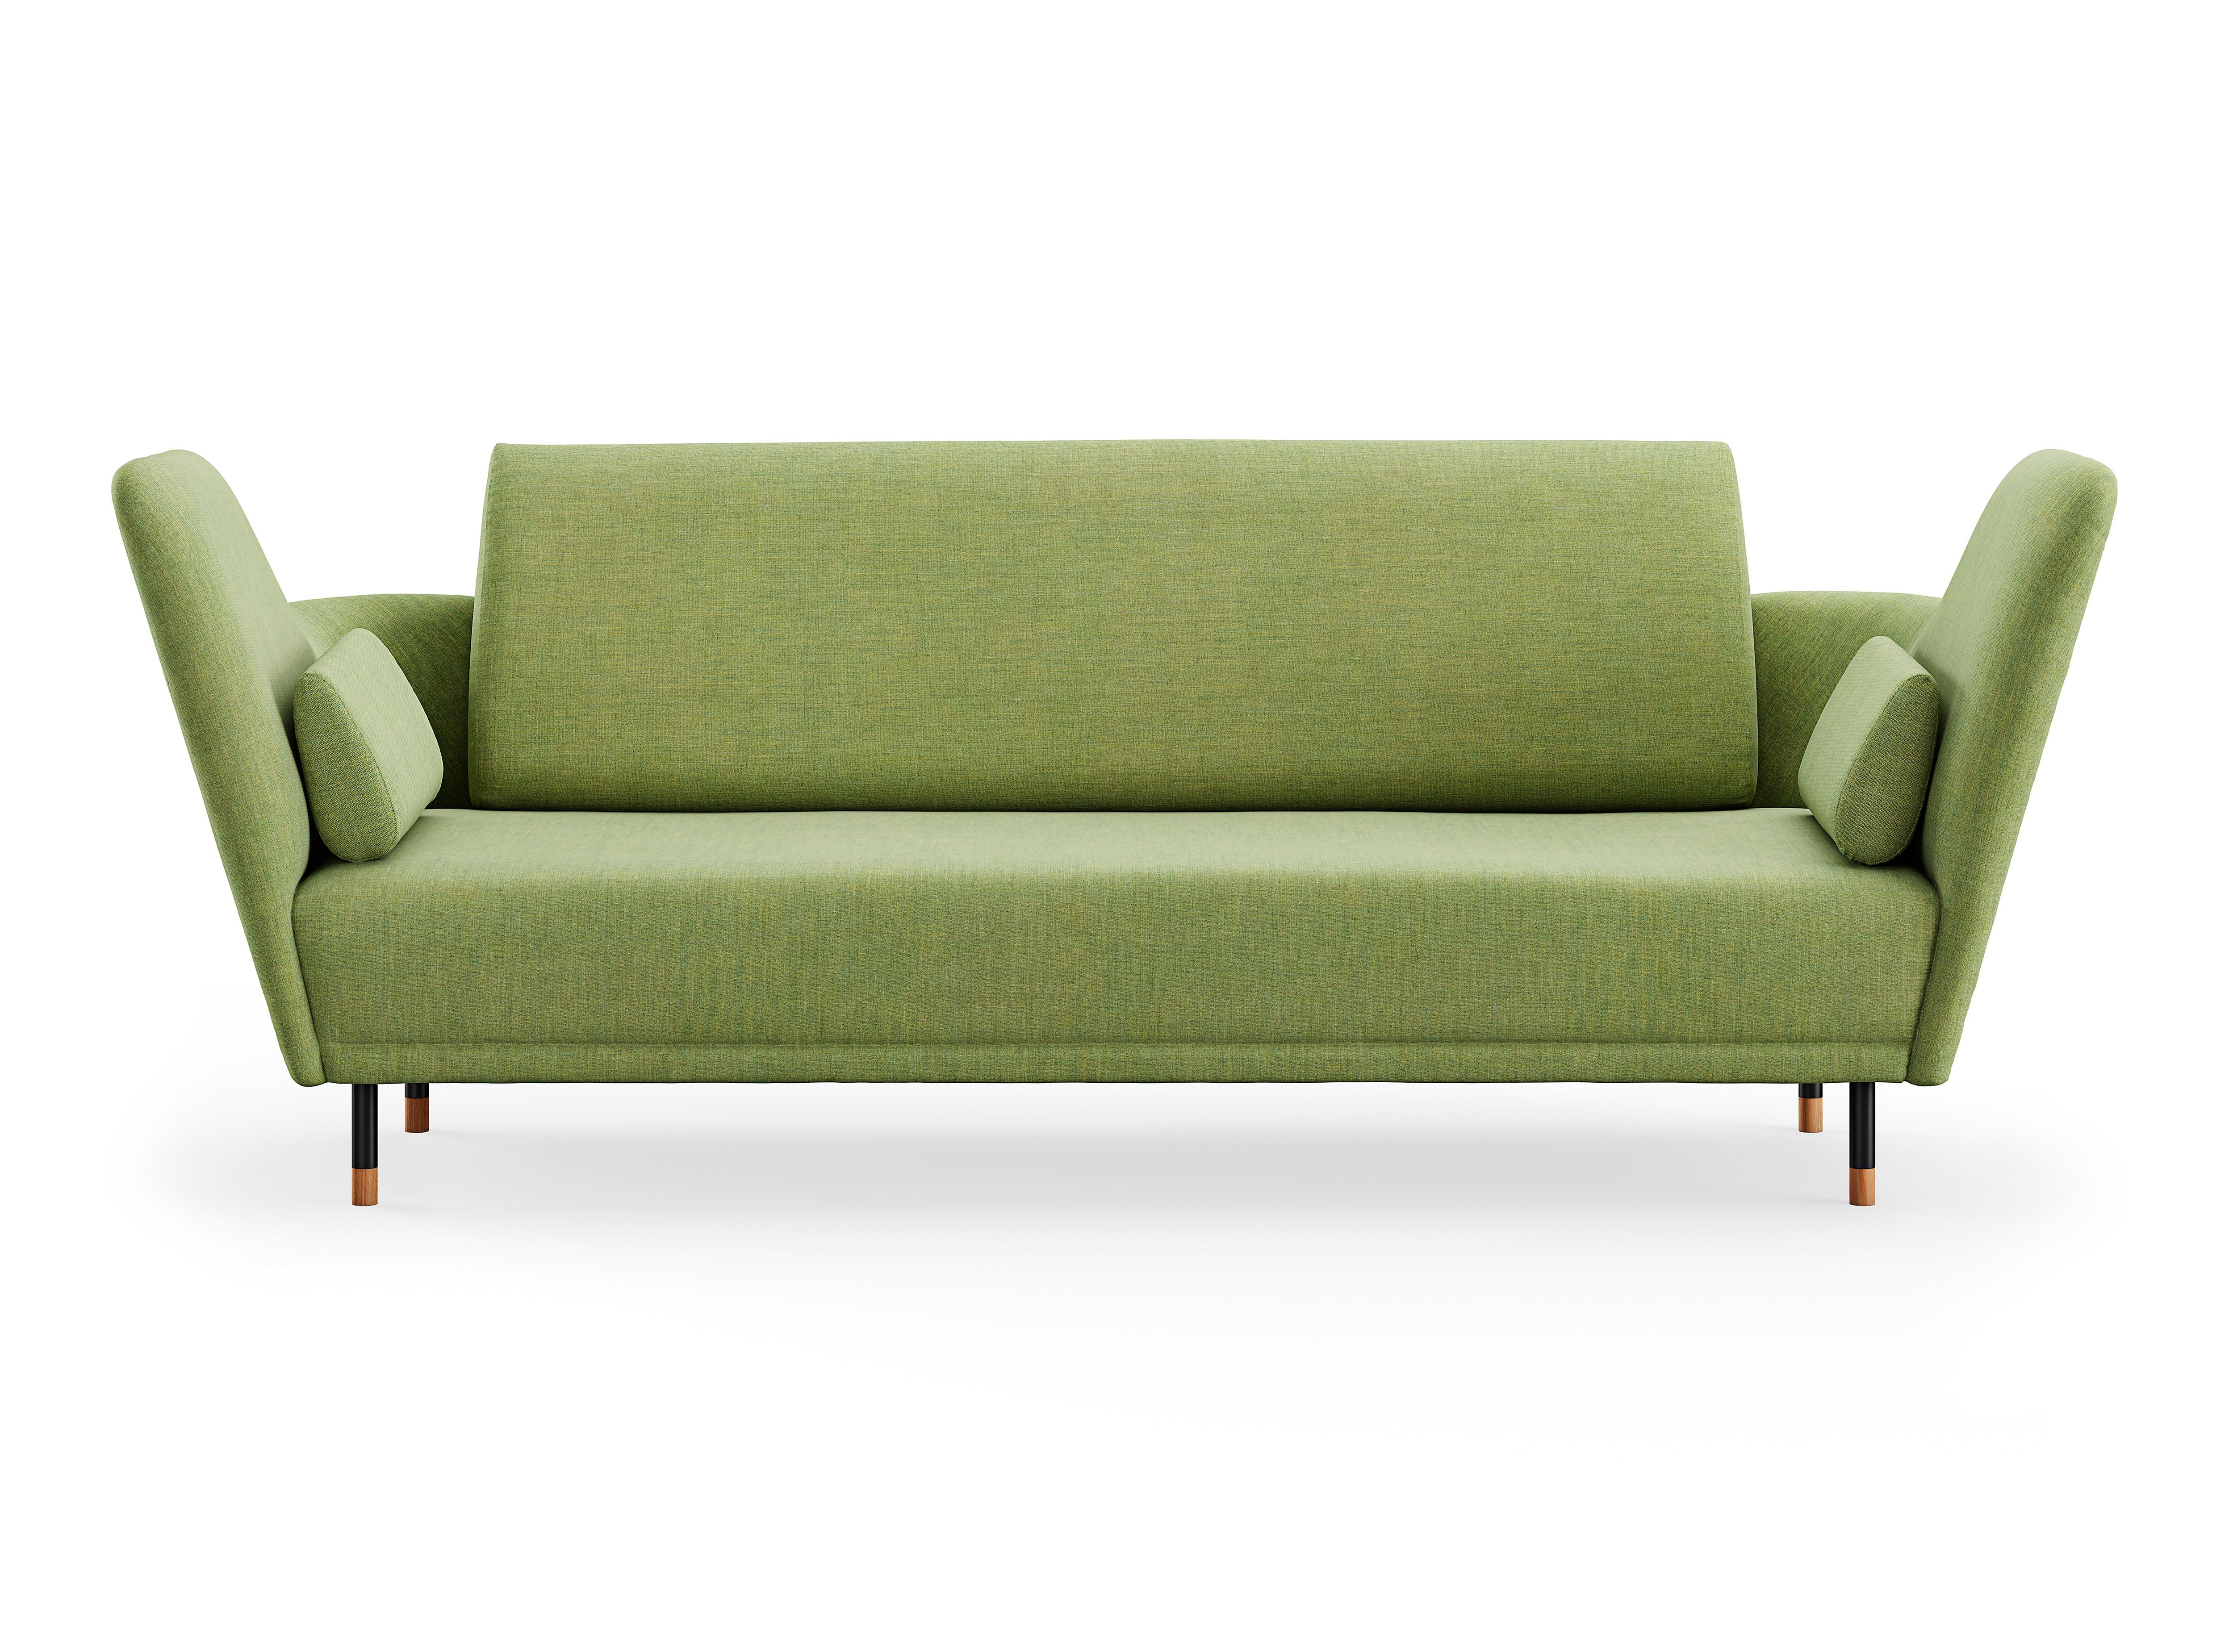 Upholstery Finn Juhl 57 Sofa by House of Finn Juhl